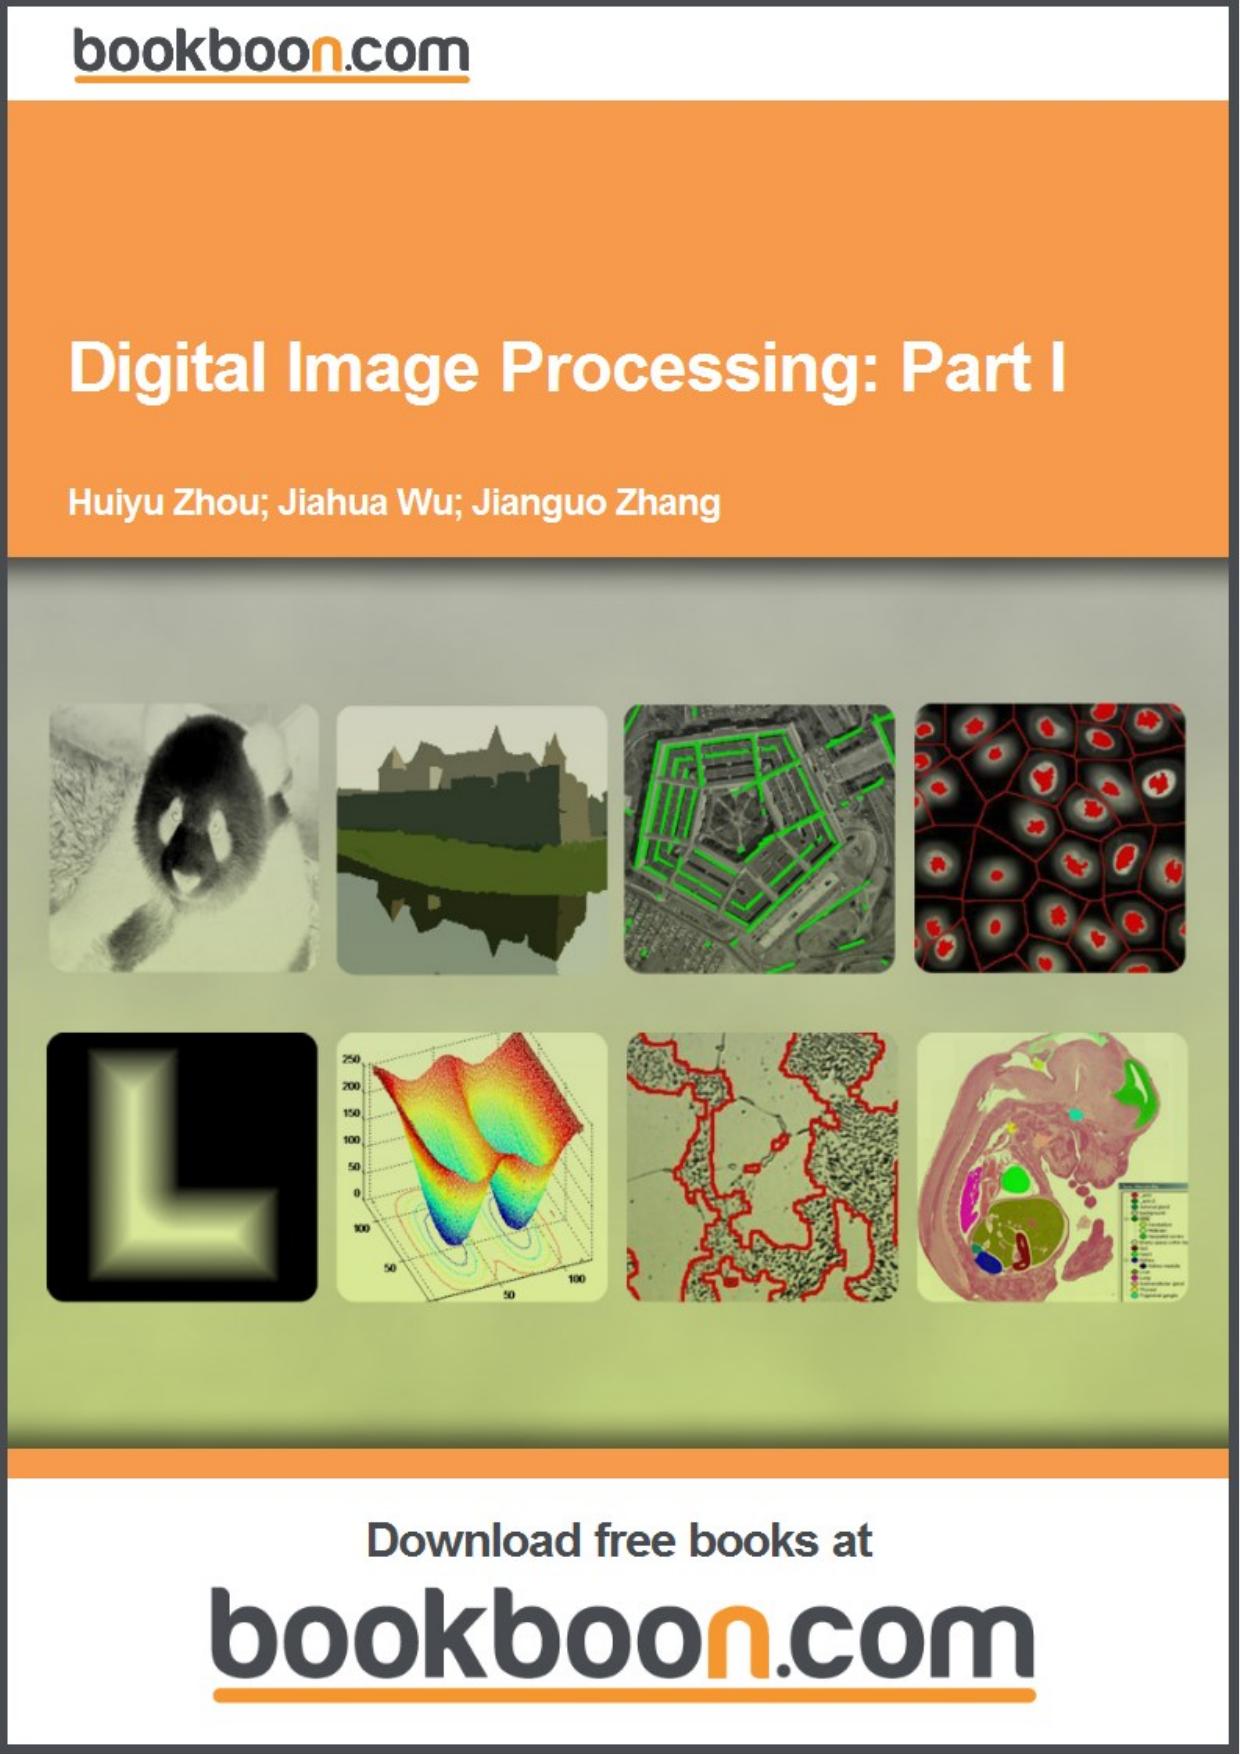 Digital Image Processing: Part I by Bookboon.com